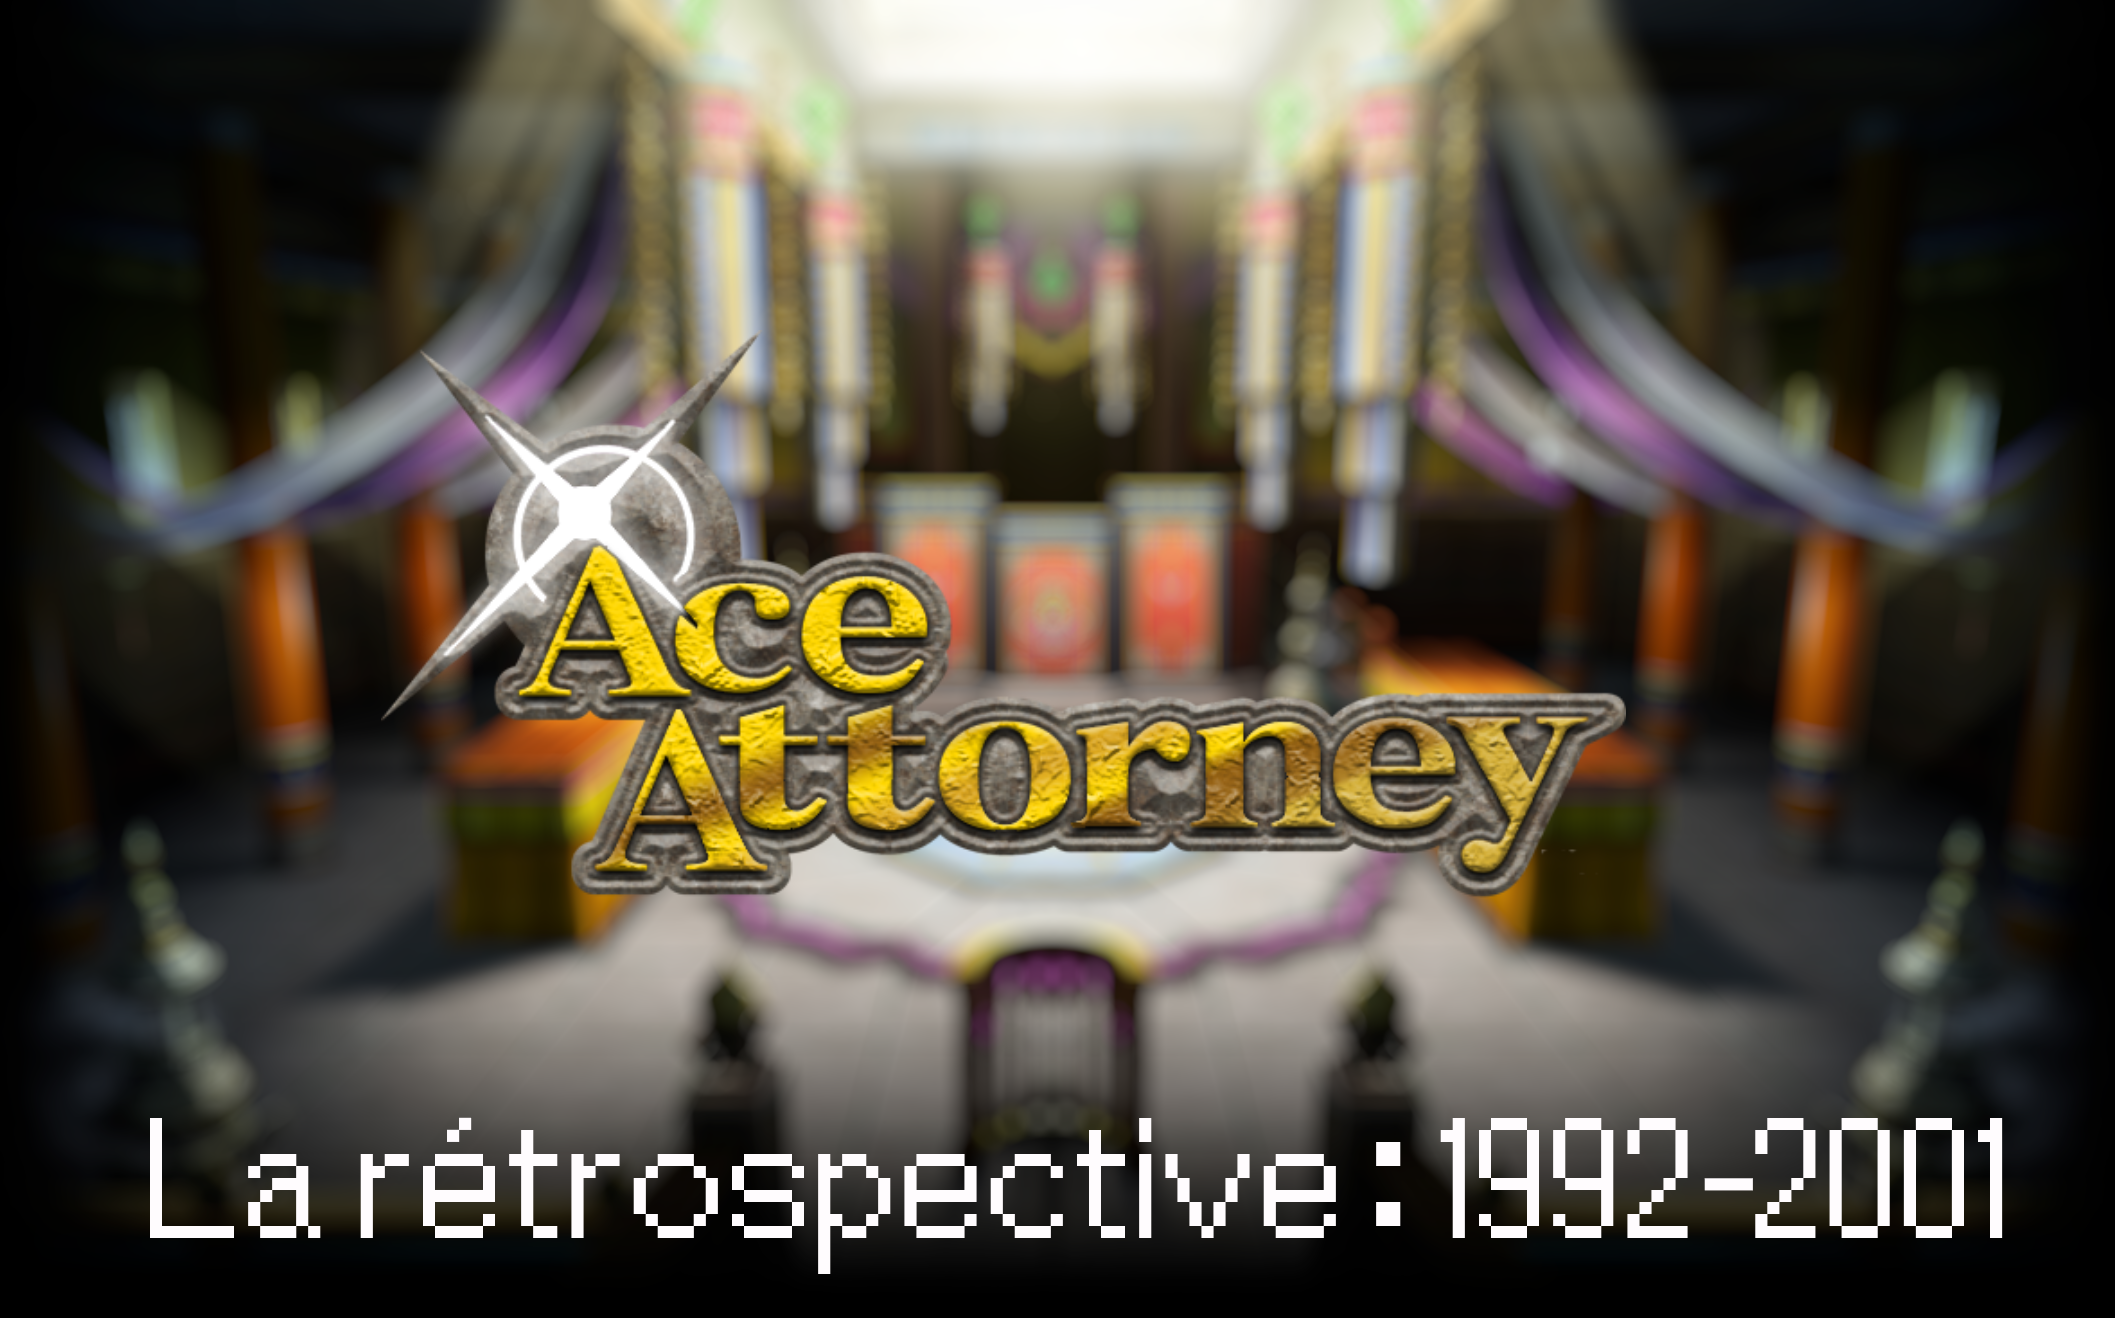 La rétrospective Ace Attorney commence aujourd'hui.